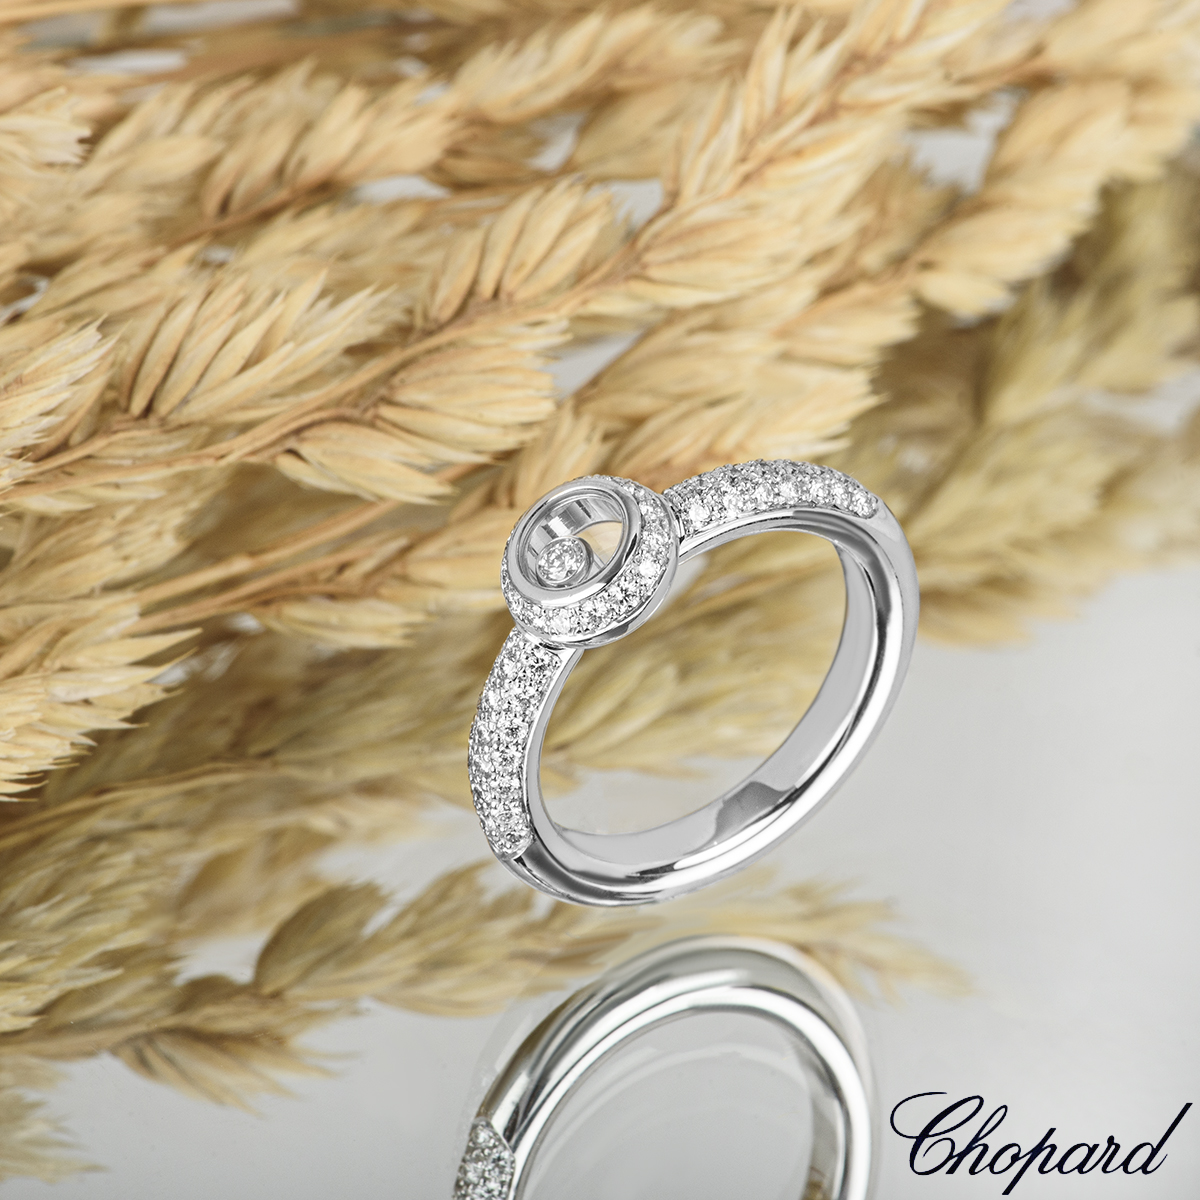 Chopard White Gold Happy Diamonds Ring 82/2902-1110